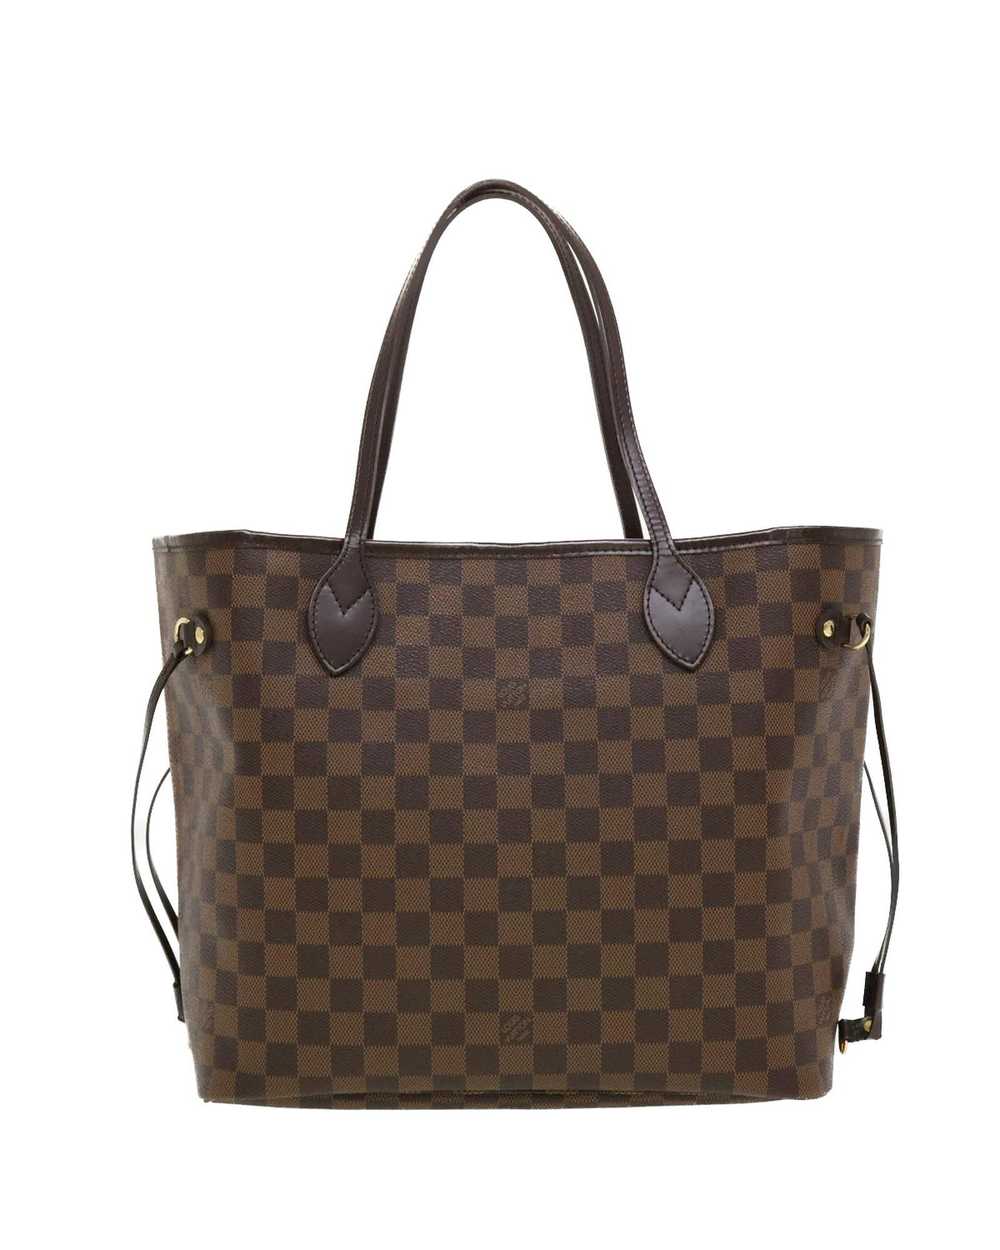 Louis Vuitton Classic Damier Ebene Tote Bag - image 2